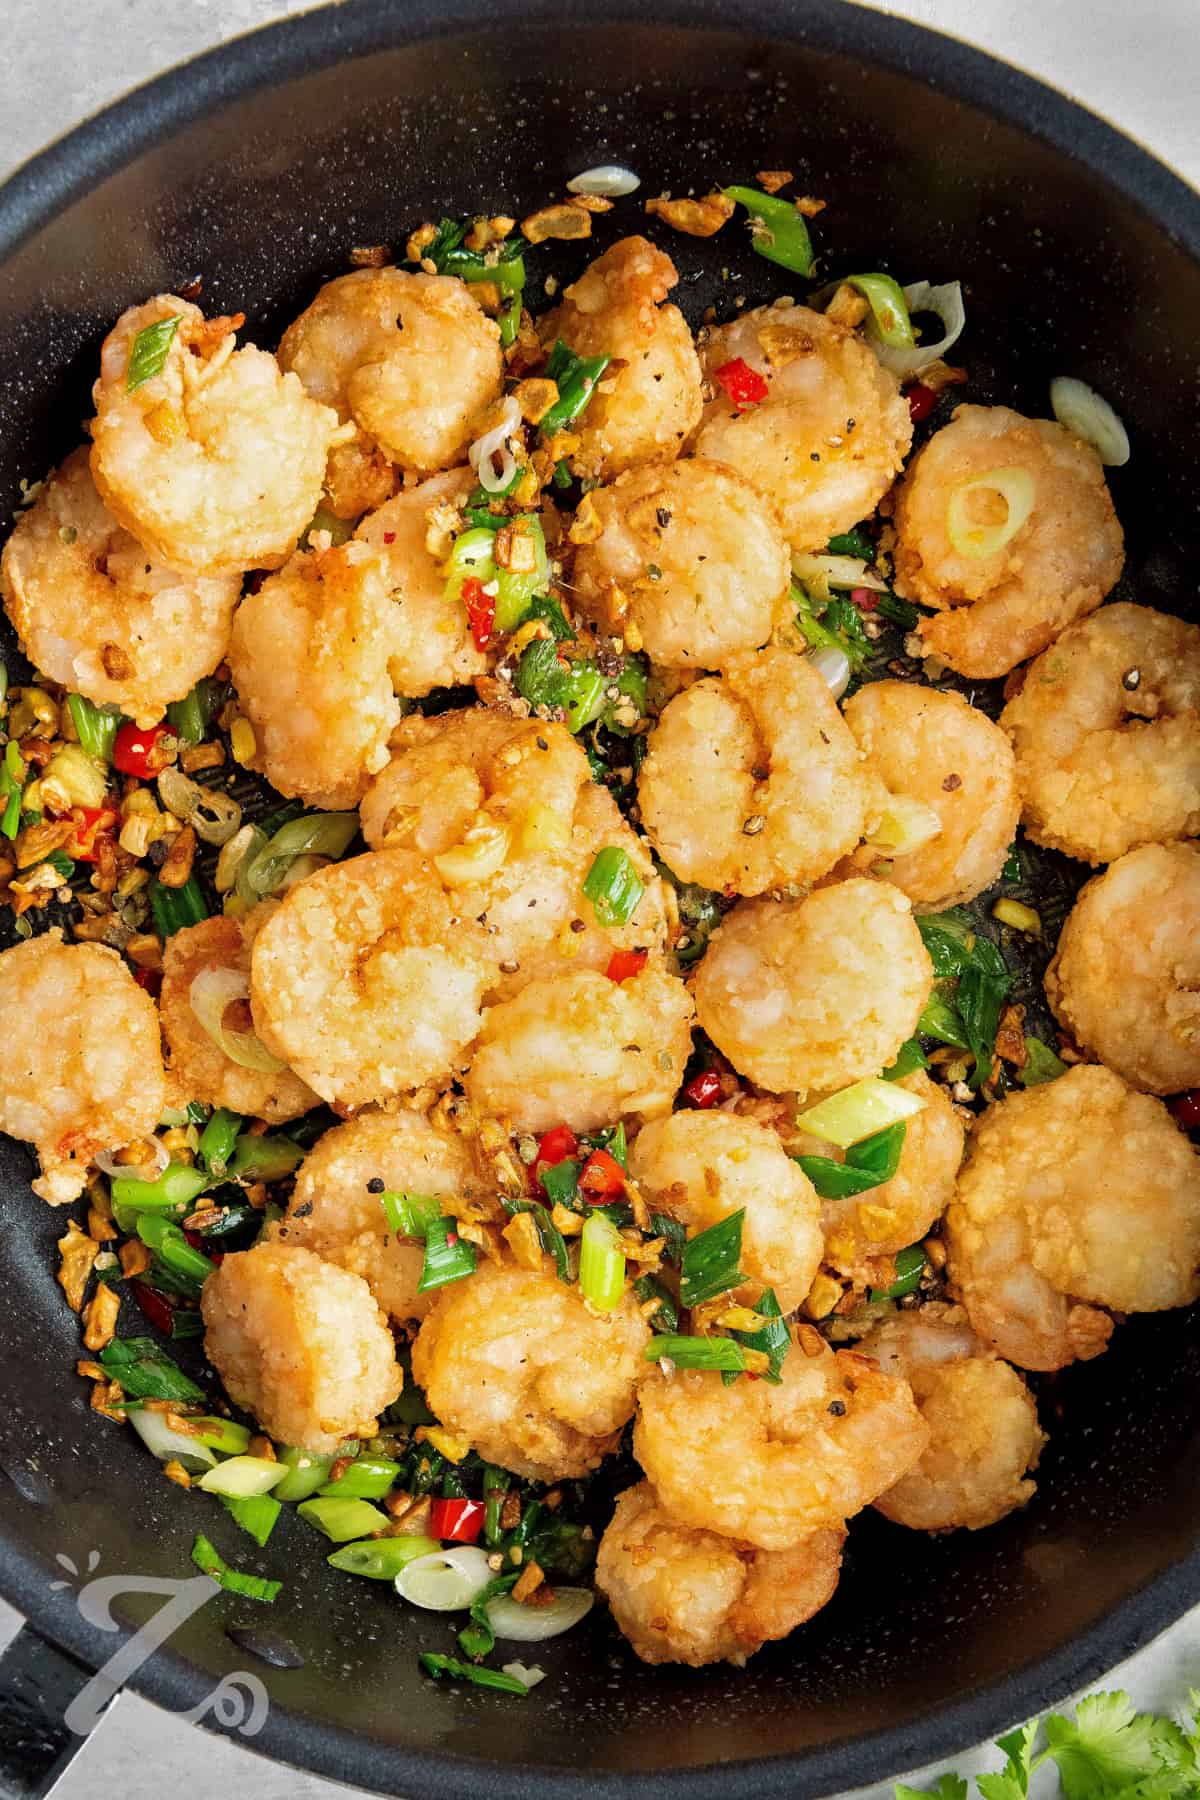 Deep fried shrimp tossed in a frying pan with seasonings